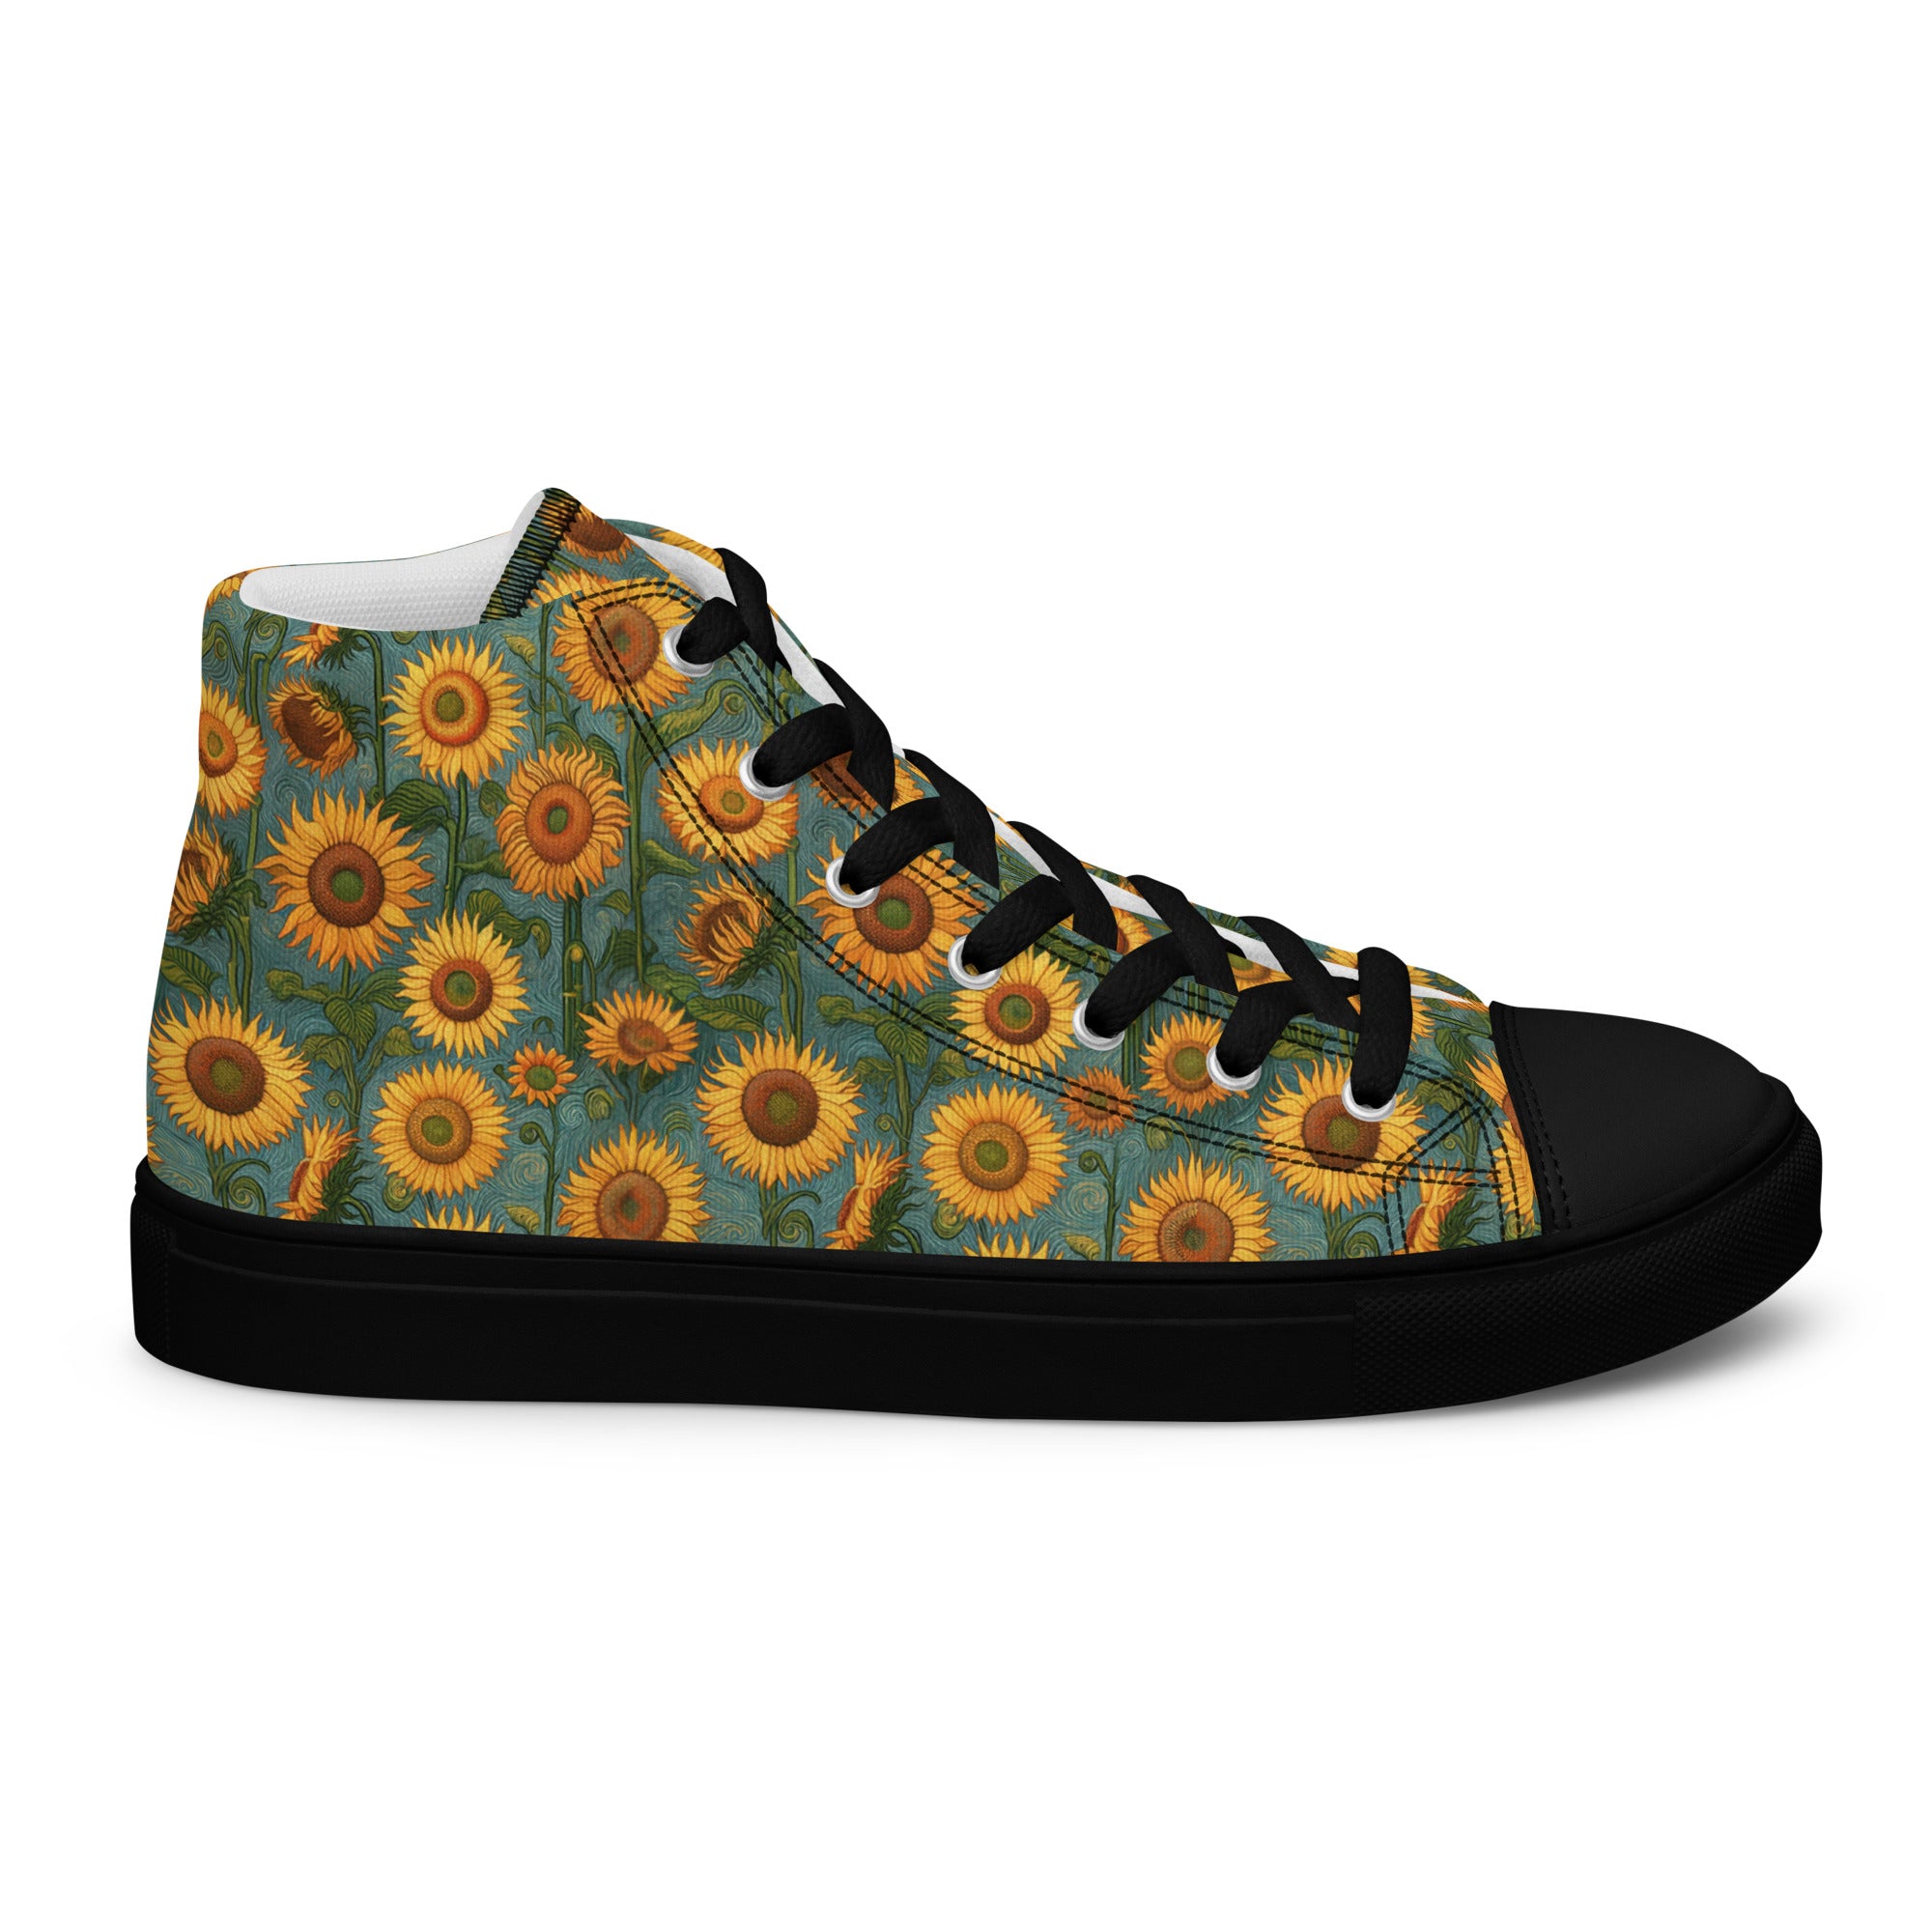 Vincent van Gogh 'Sunflowers' High Top Shoes | Premium Art High Top Sneakers for Men